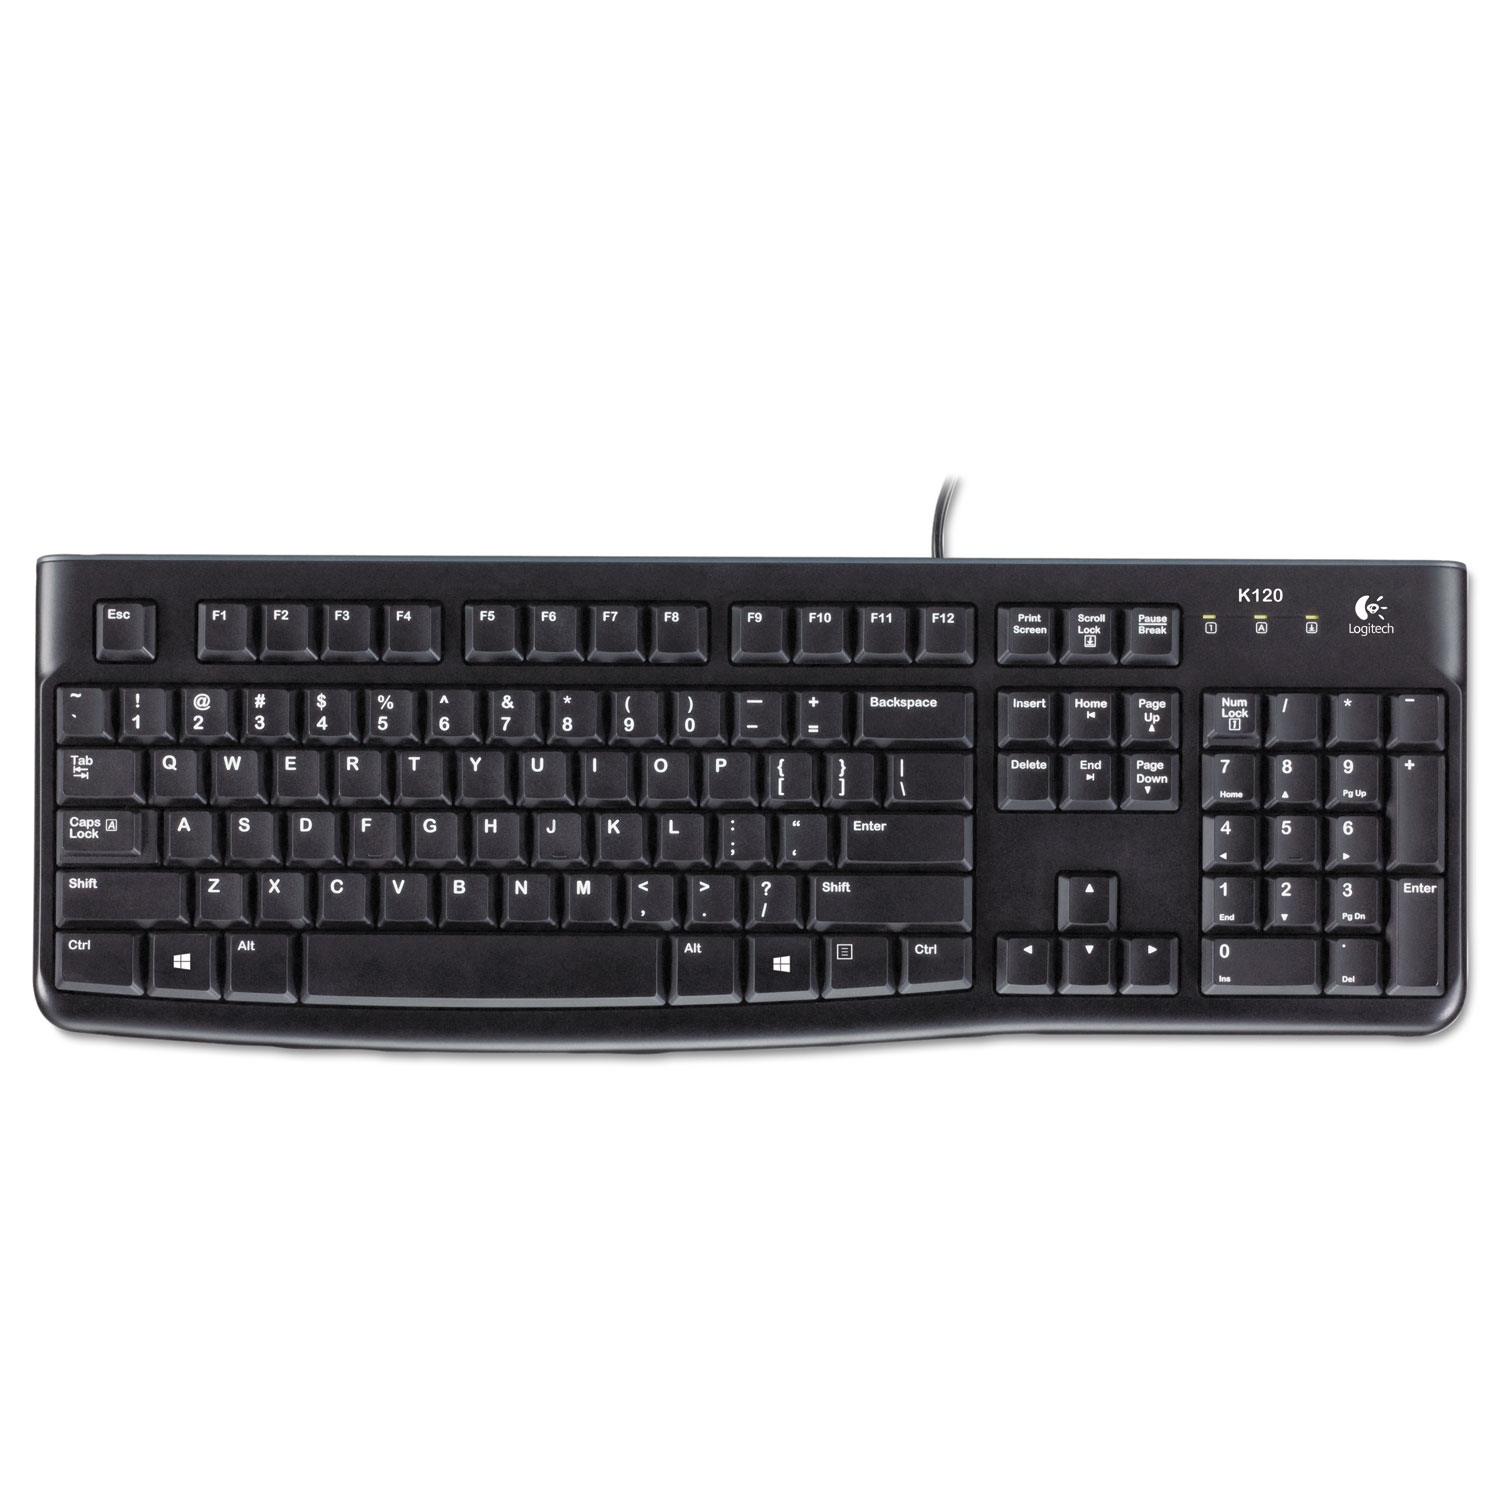 Logitech K120 Ergonomic Desktop Wired Keyboard, USB, Black (920002478) - image 3 of 5